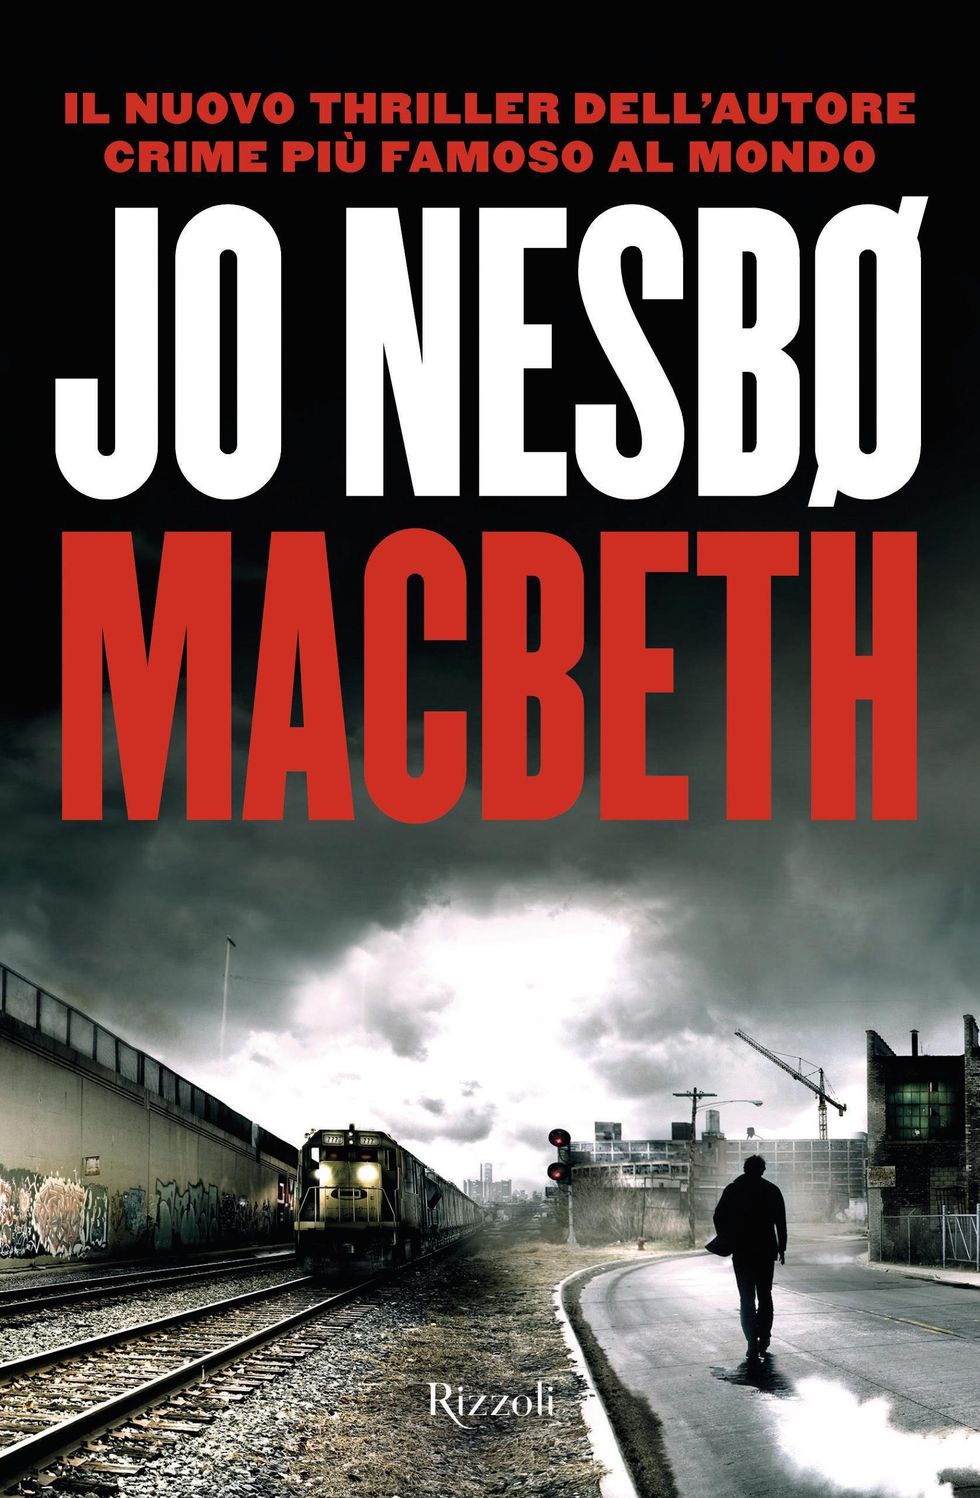 Libri gialli 2018 Macbeth